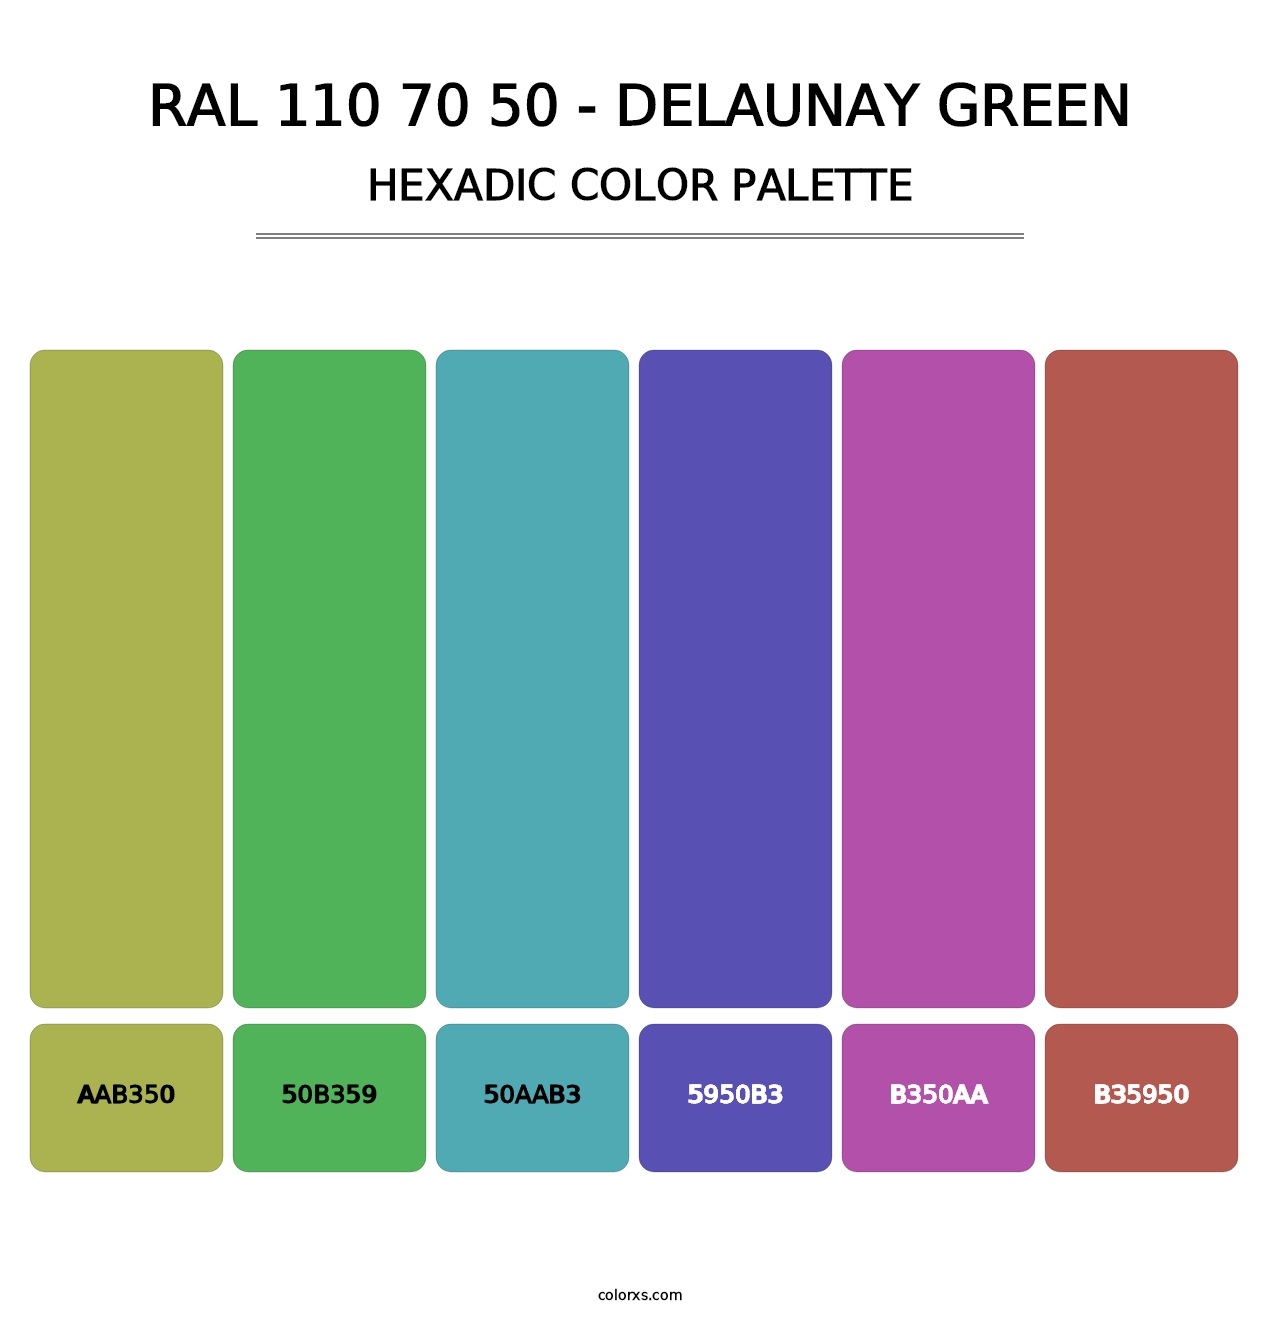 RAL 110 70 50 - Delaunay Green - Hexadic Color Palette